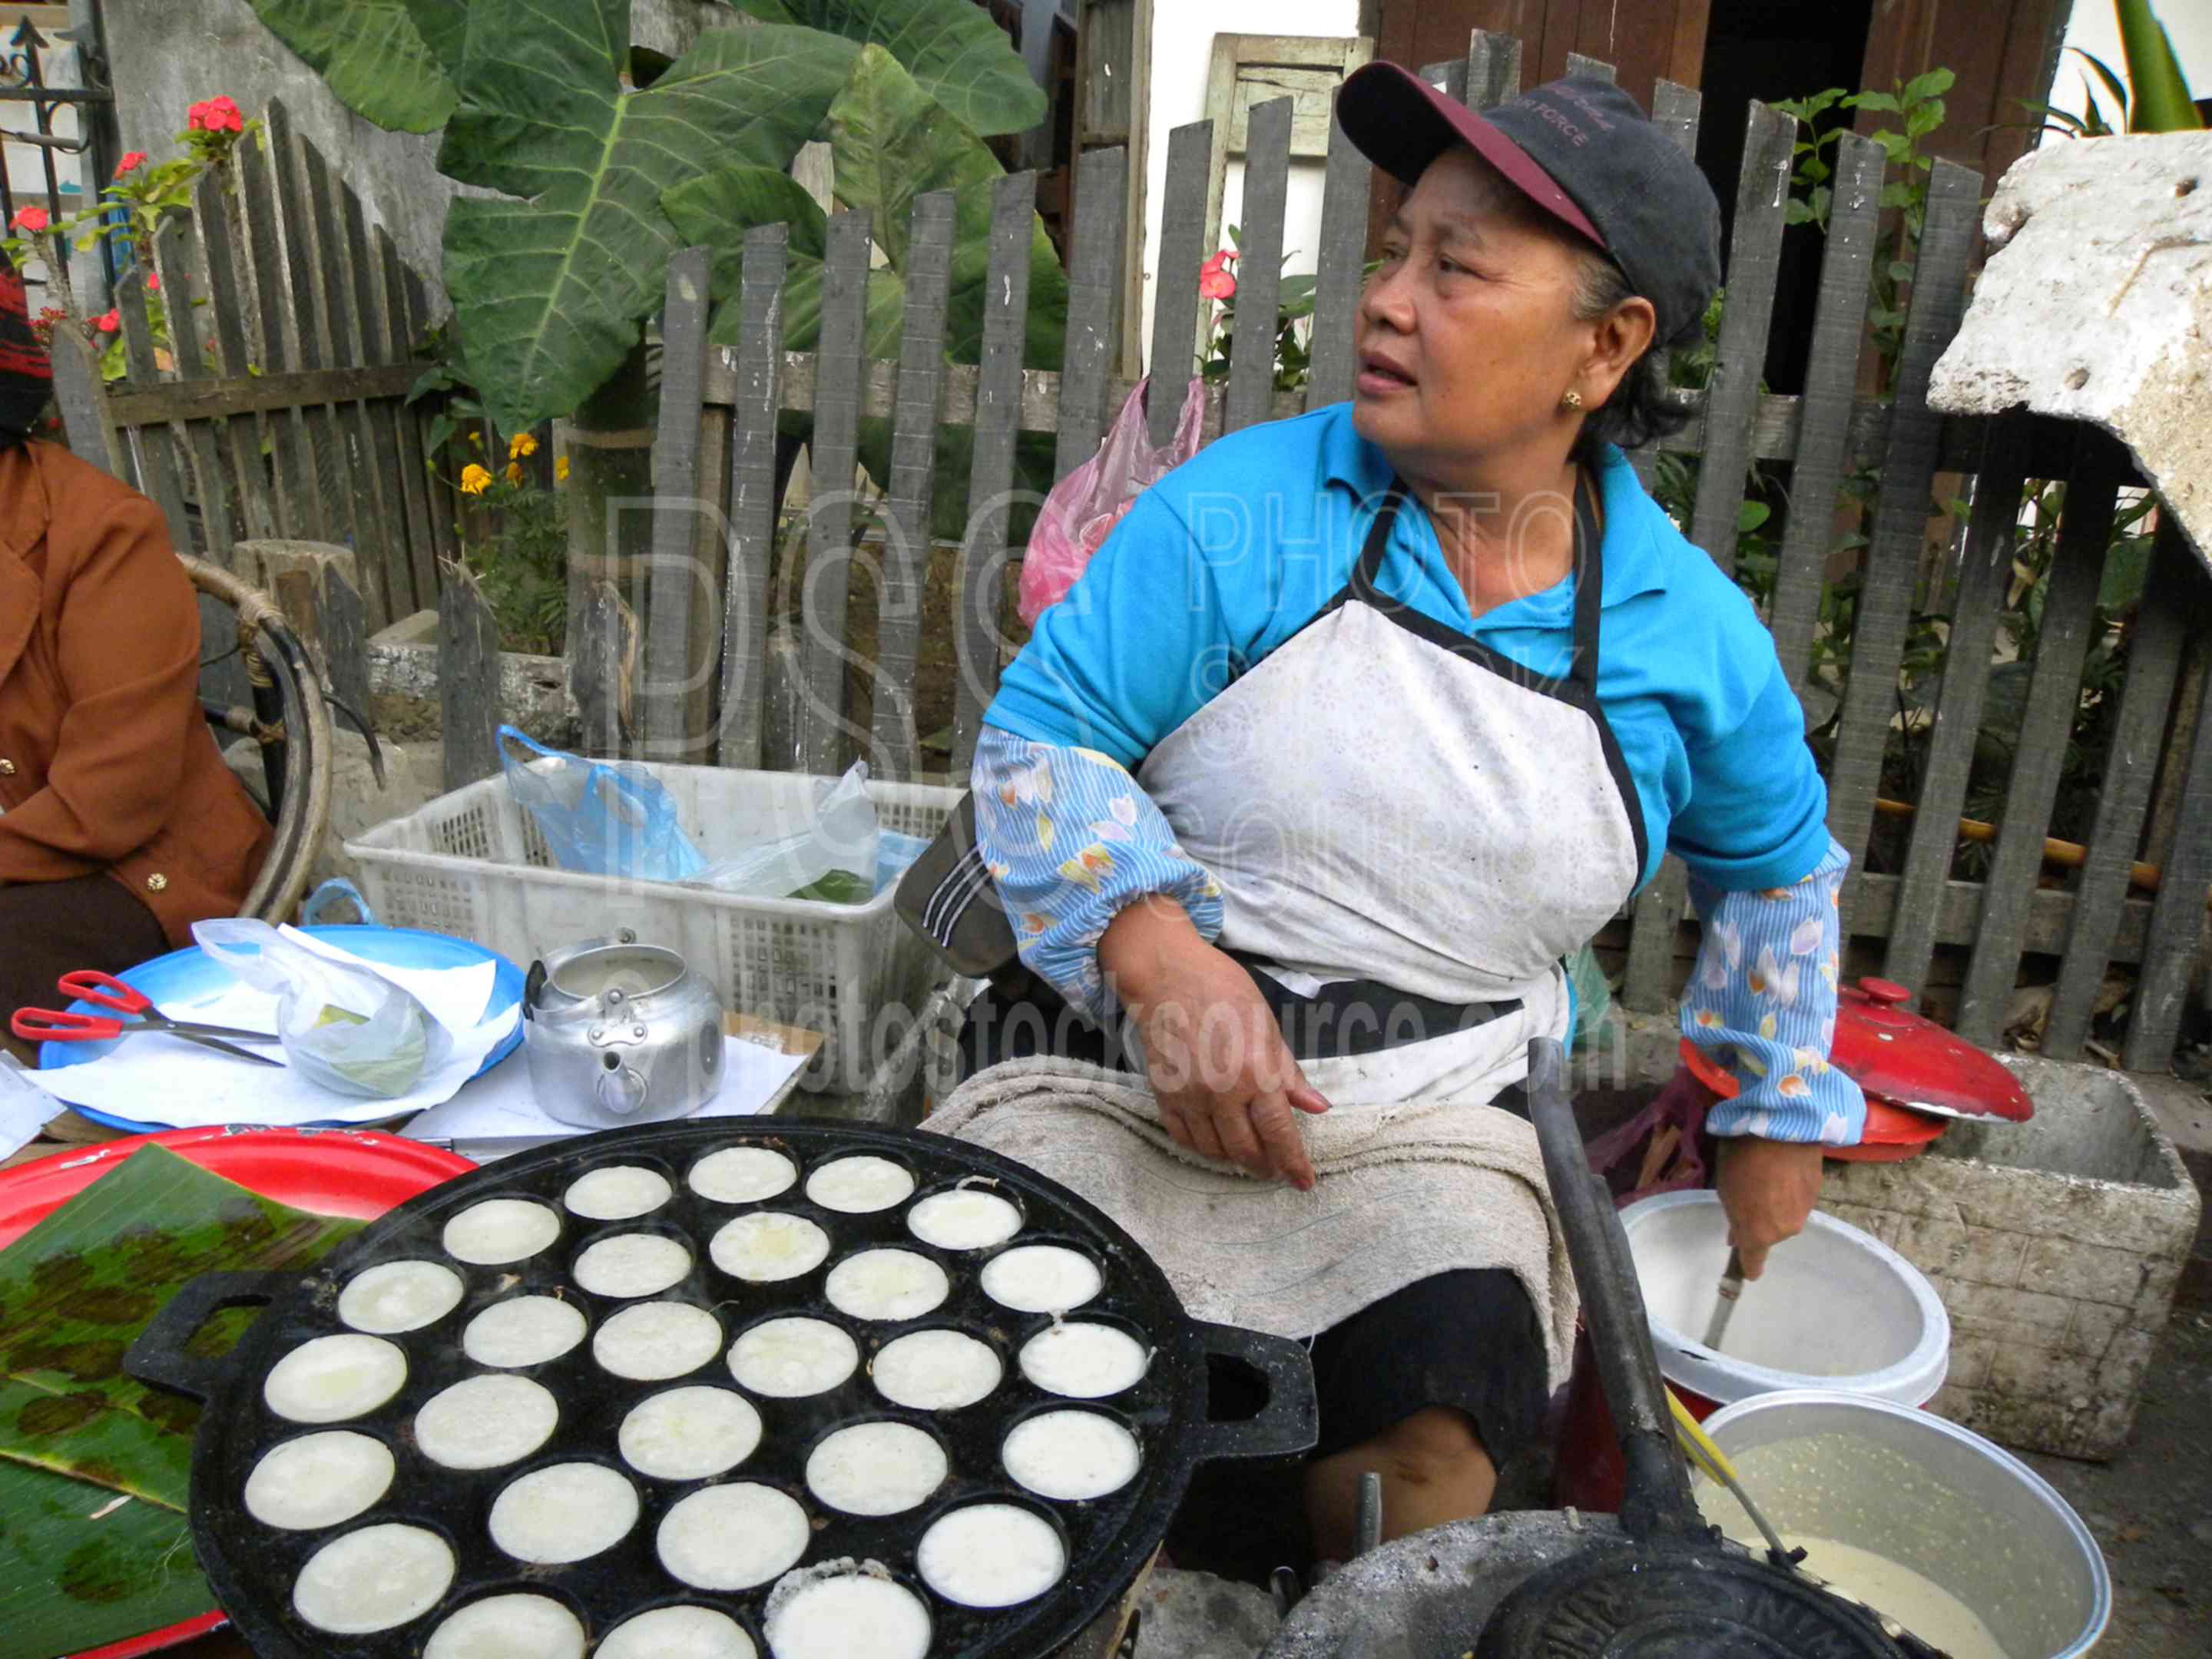 Woman Cooking Turnovers,louang prabang,market,food,morning,talat dala,produce,goods,people,woman,cooking